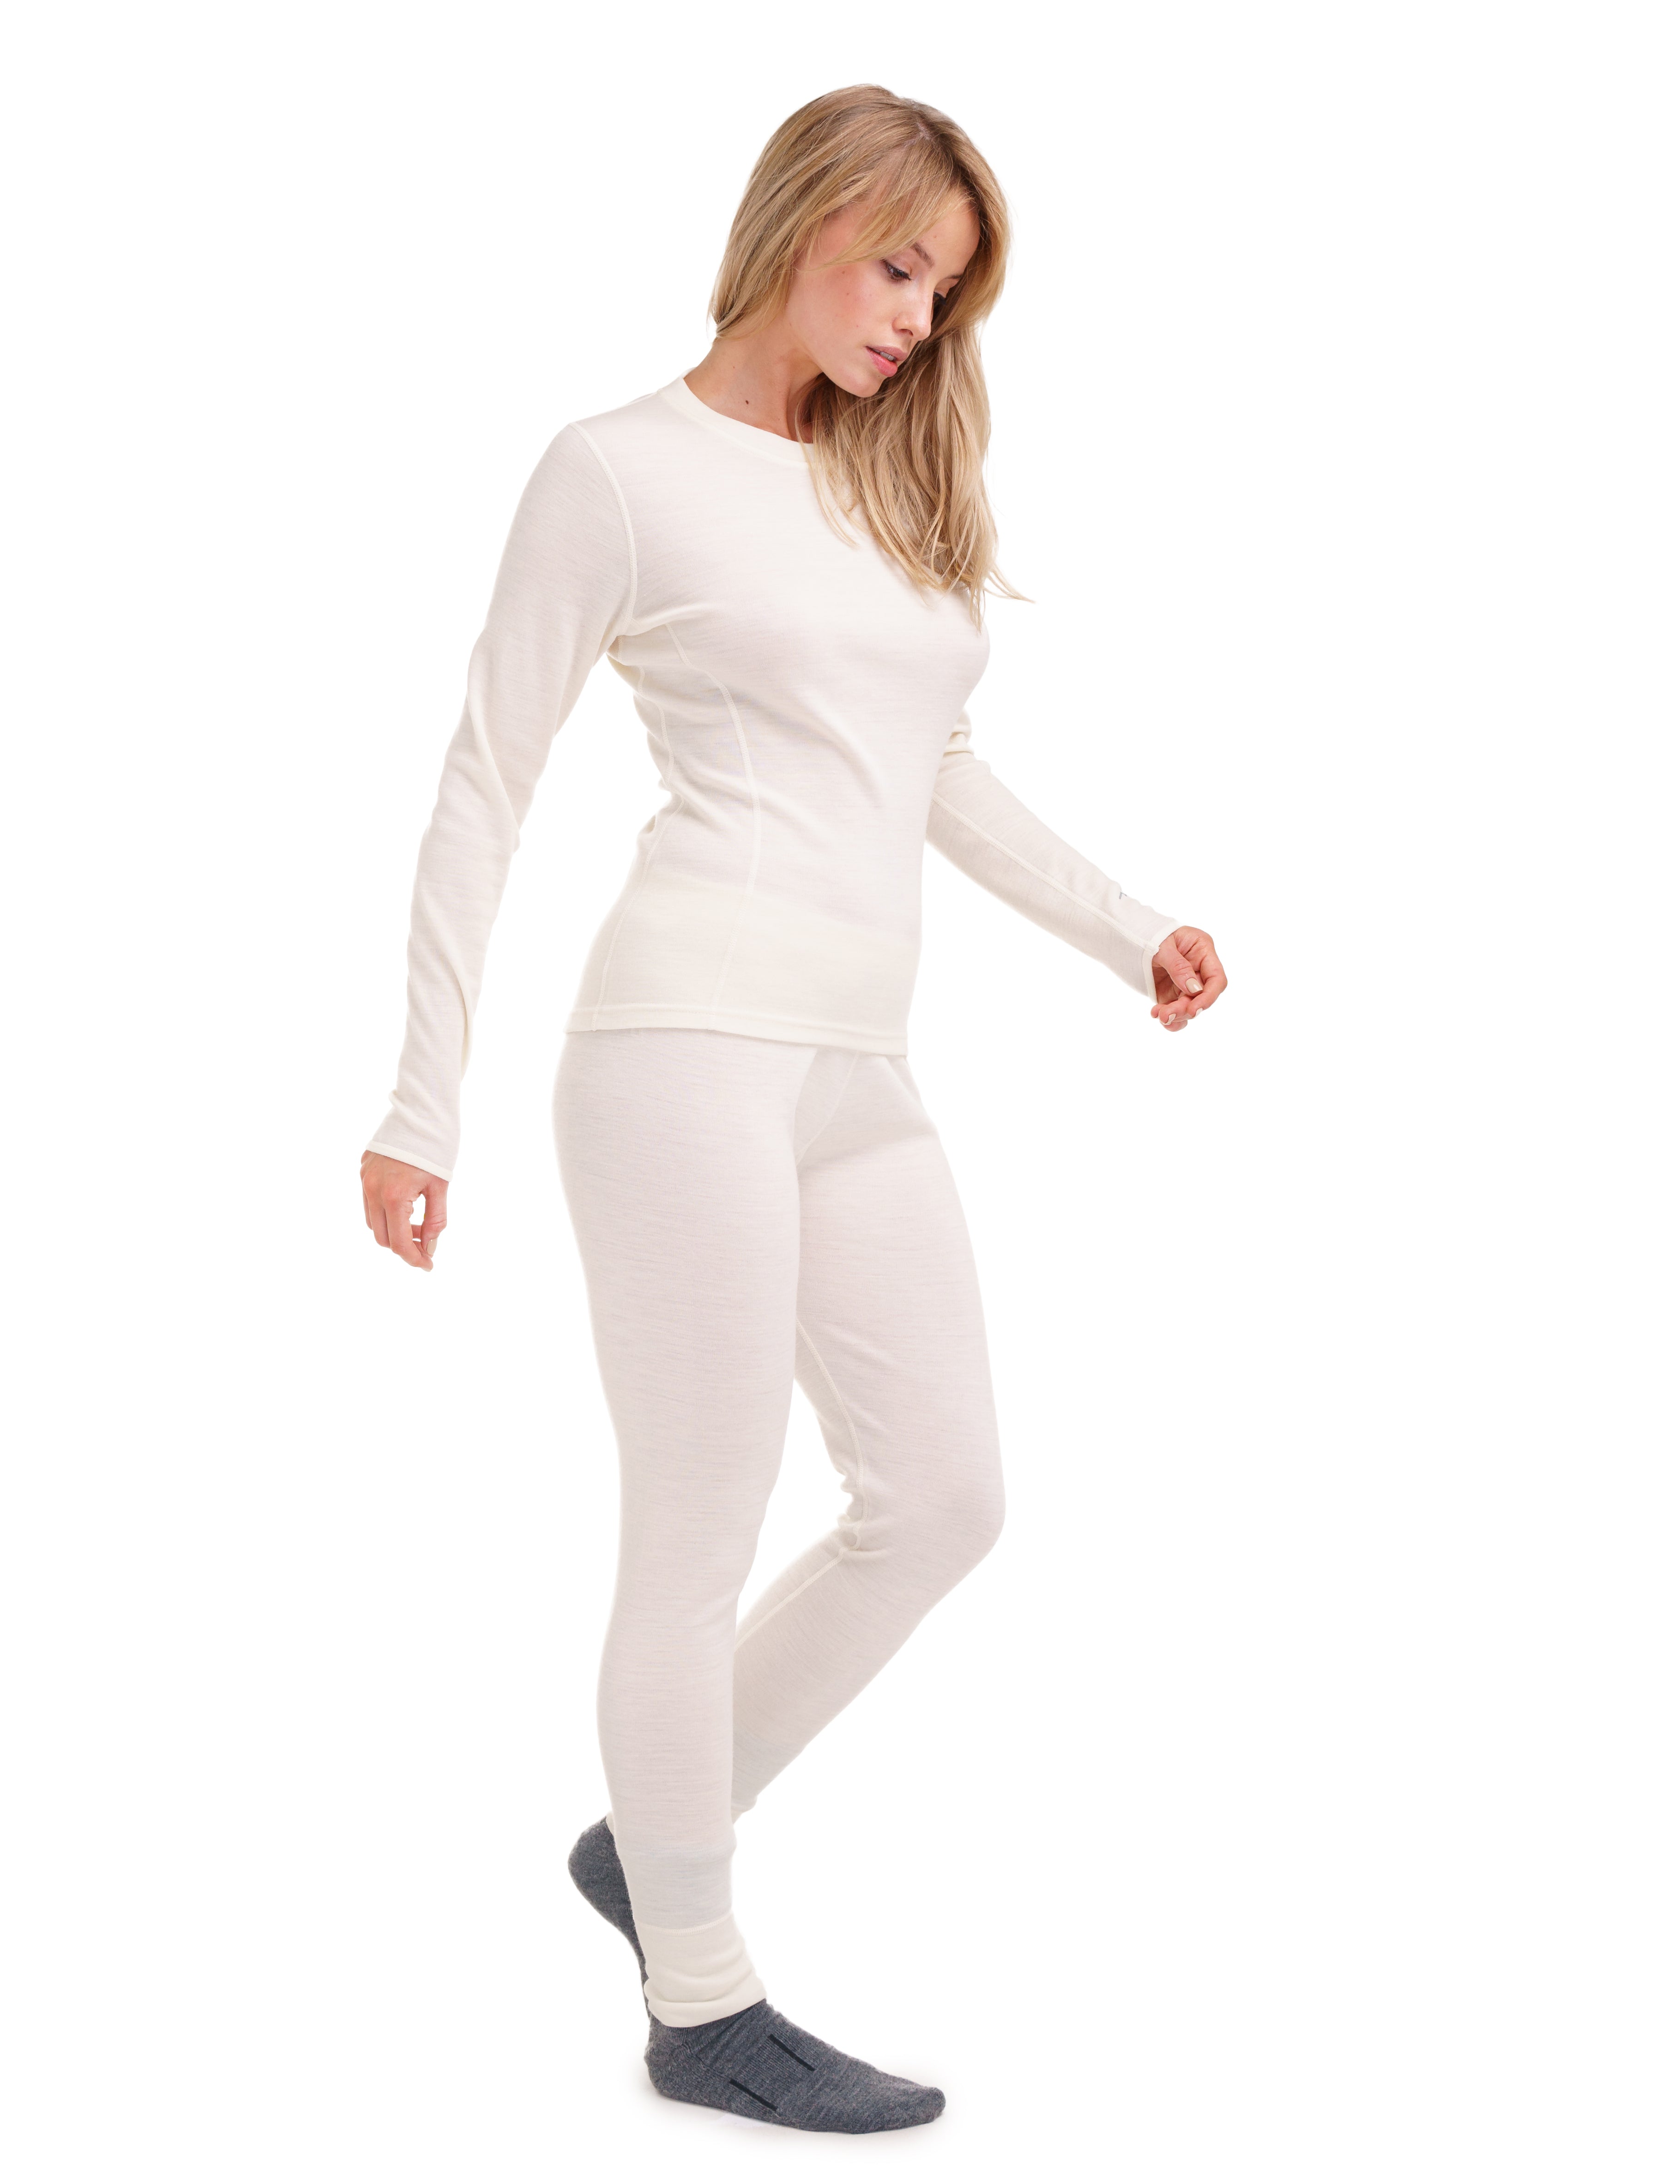 Merino Wool Long Sleeve (Camel) Thermal Base Layer Underwear